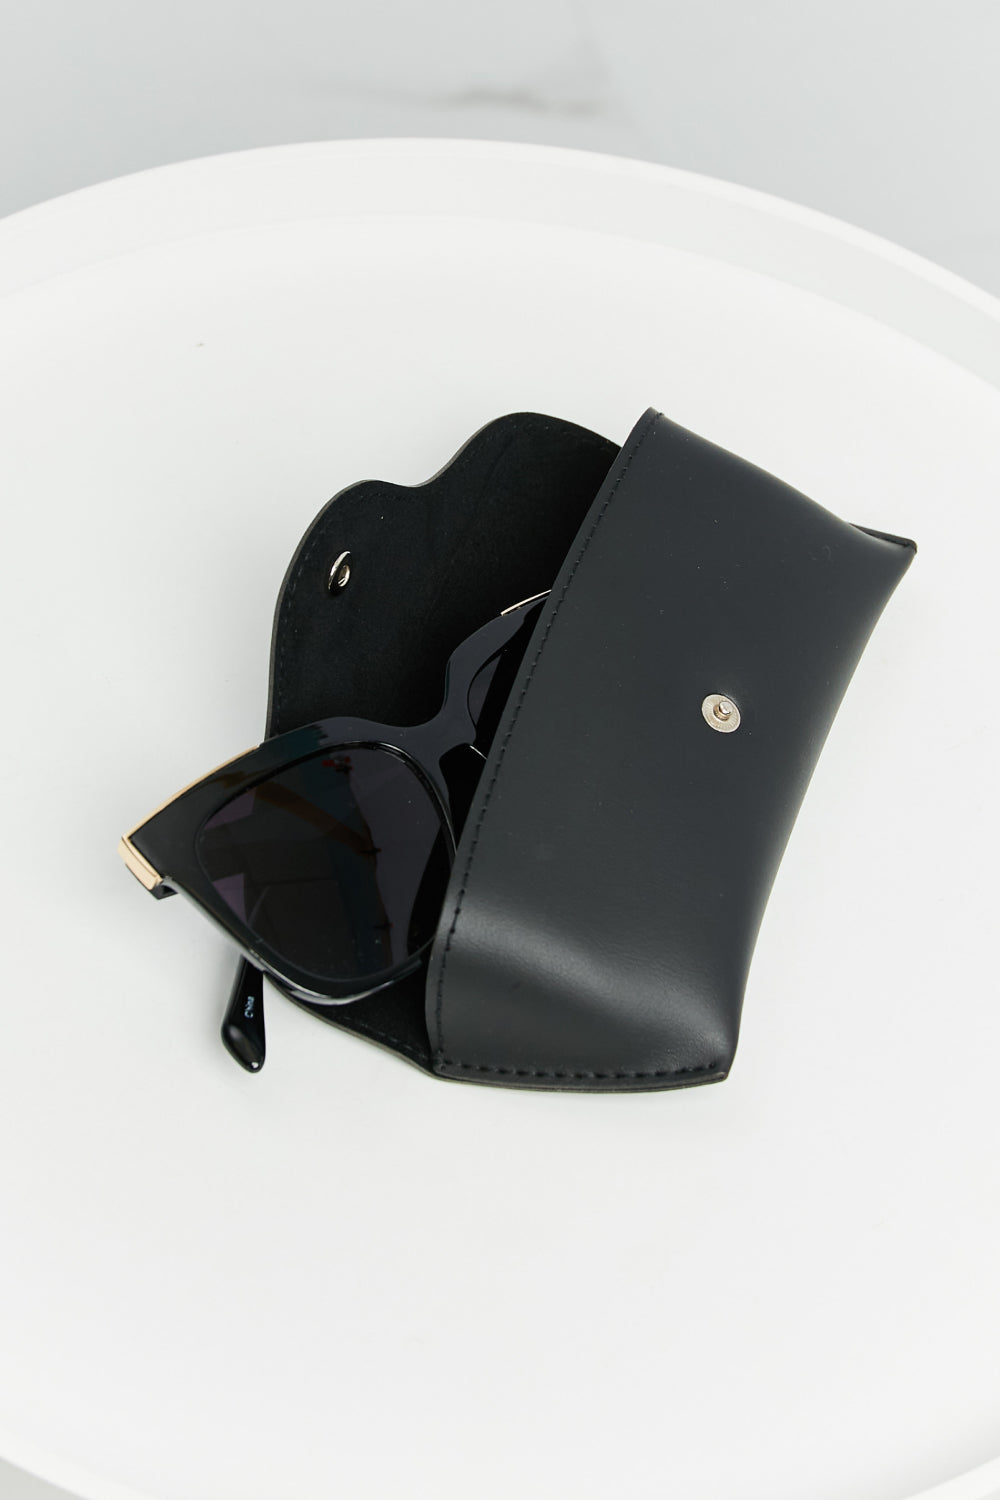 Full Rim Metal-Plastic Hybrid Frame Sunglasses Print on any thing USA/STOD clothes